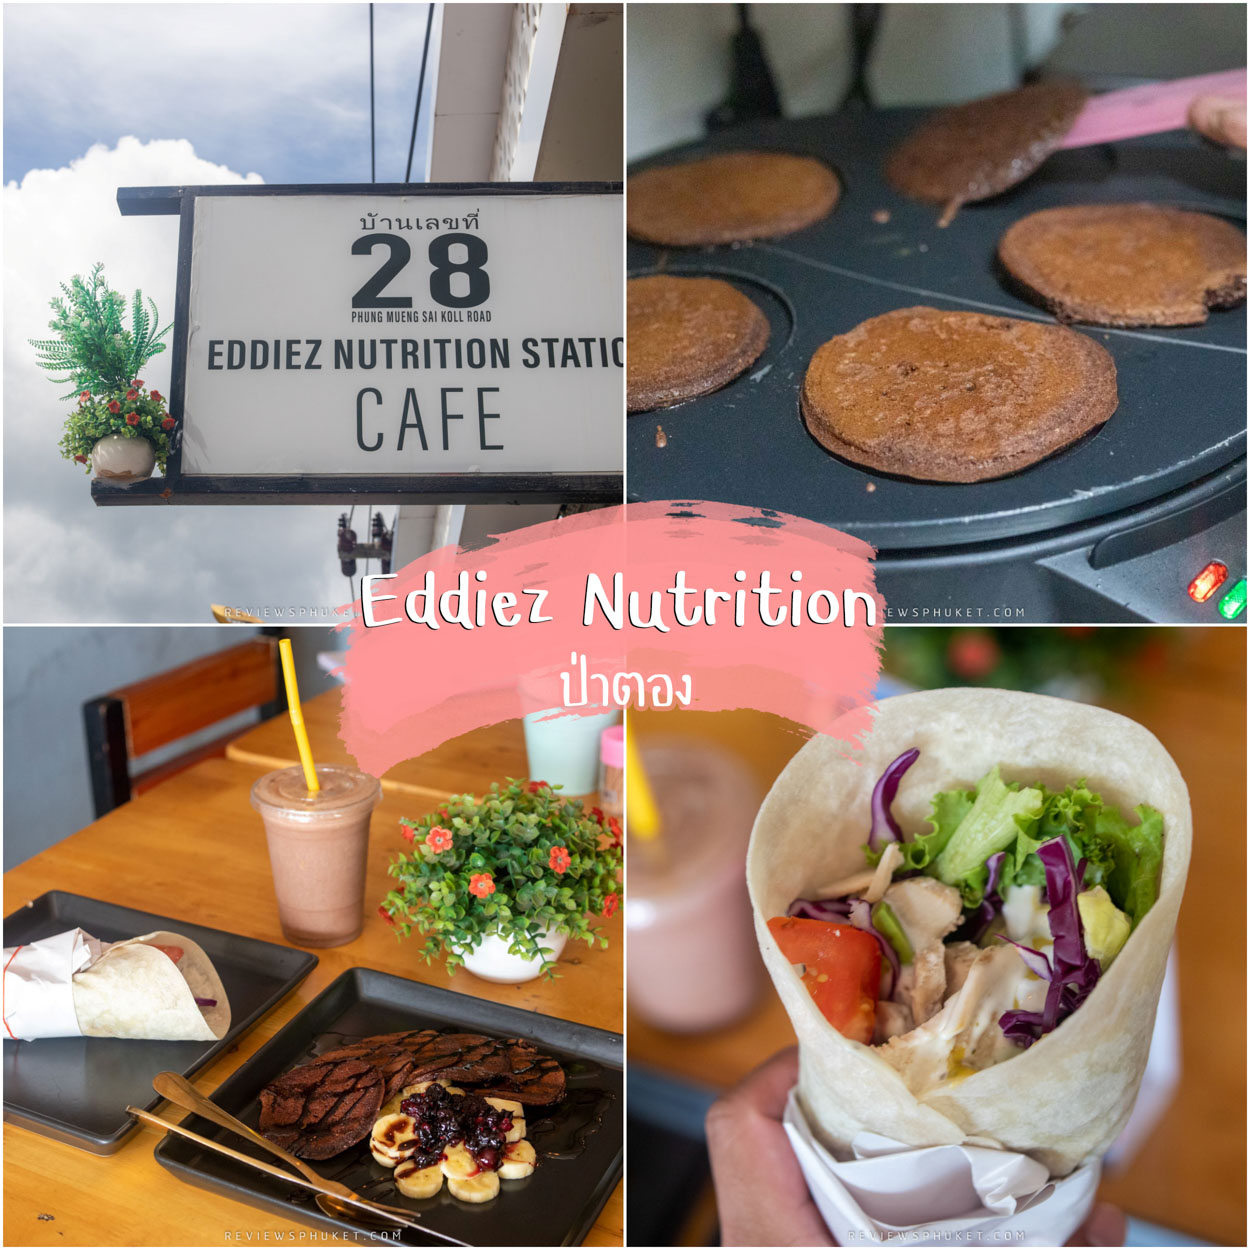 Eddiez Nutrition Cafe ที่สุดแห่งร้านอินดี้ป่าตอง บอกเลยร้านนี้เด็ดจุดเด่นคือทุกเมนูสุขภาพทั้งหมด